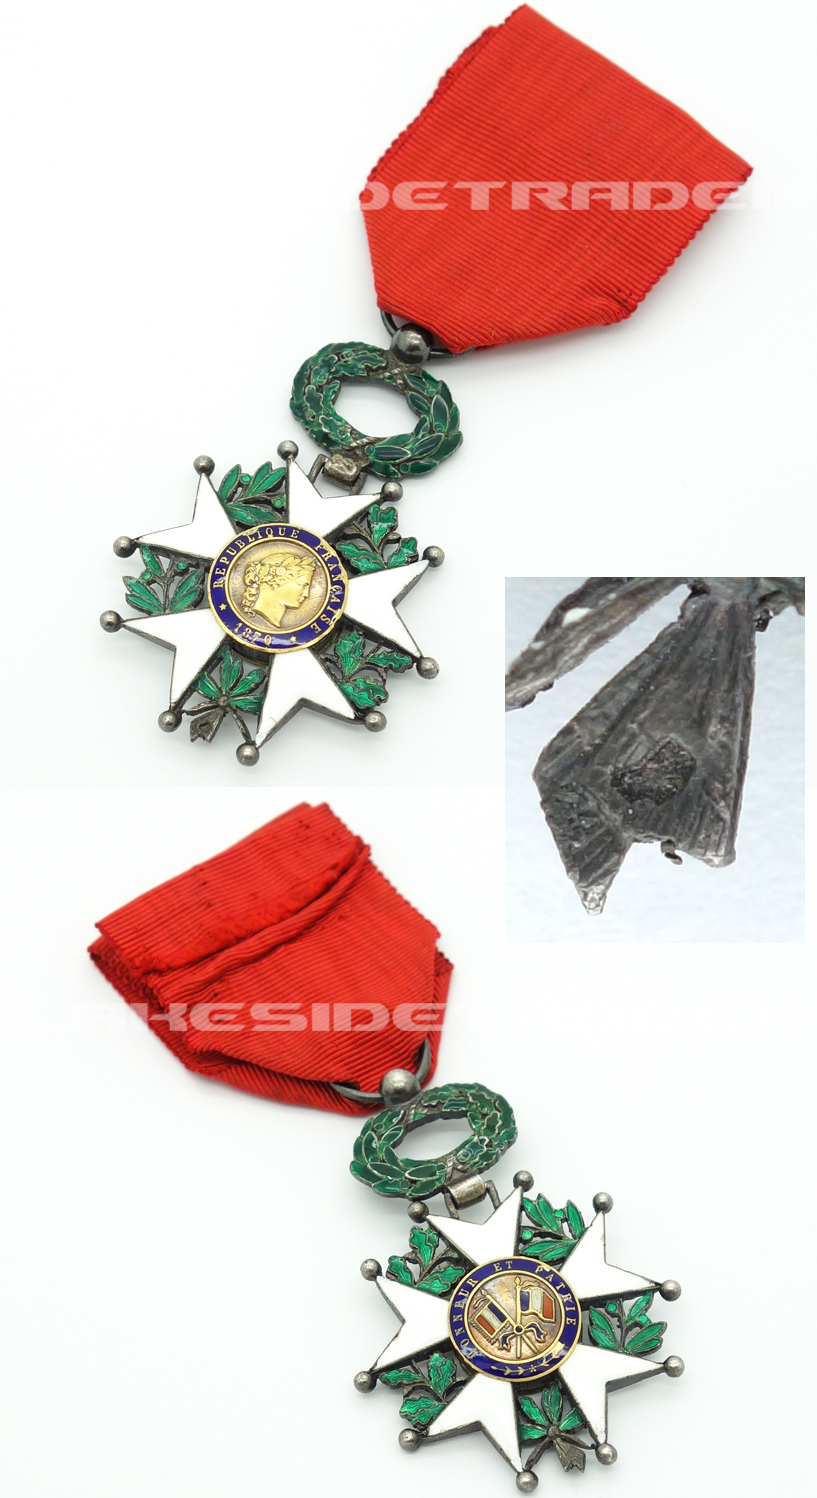 France - Third Republic Knight’s Legion of Honor